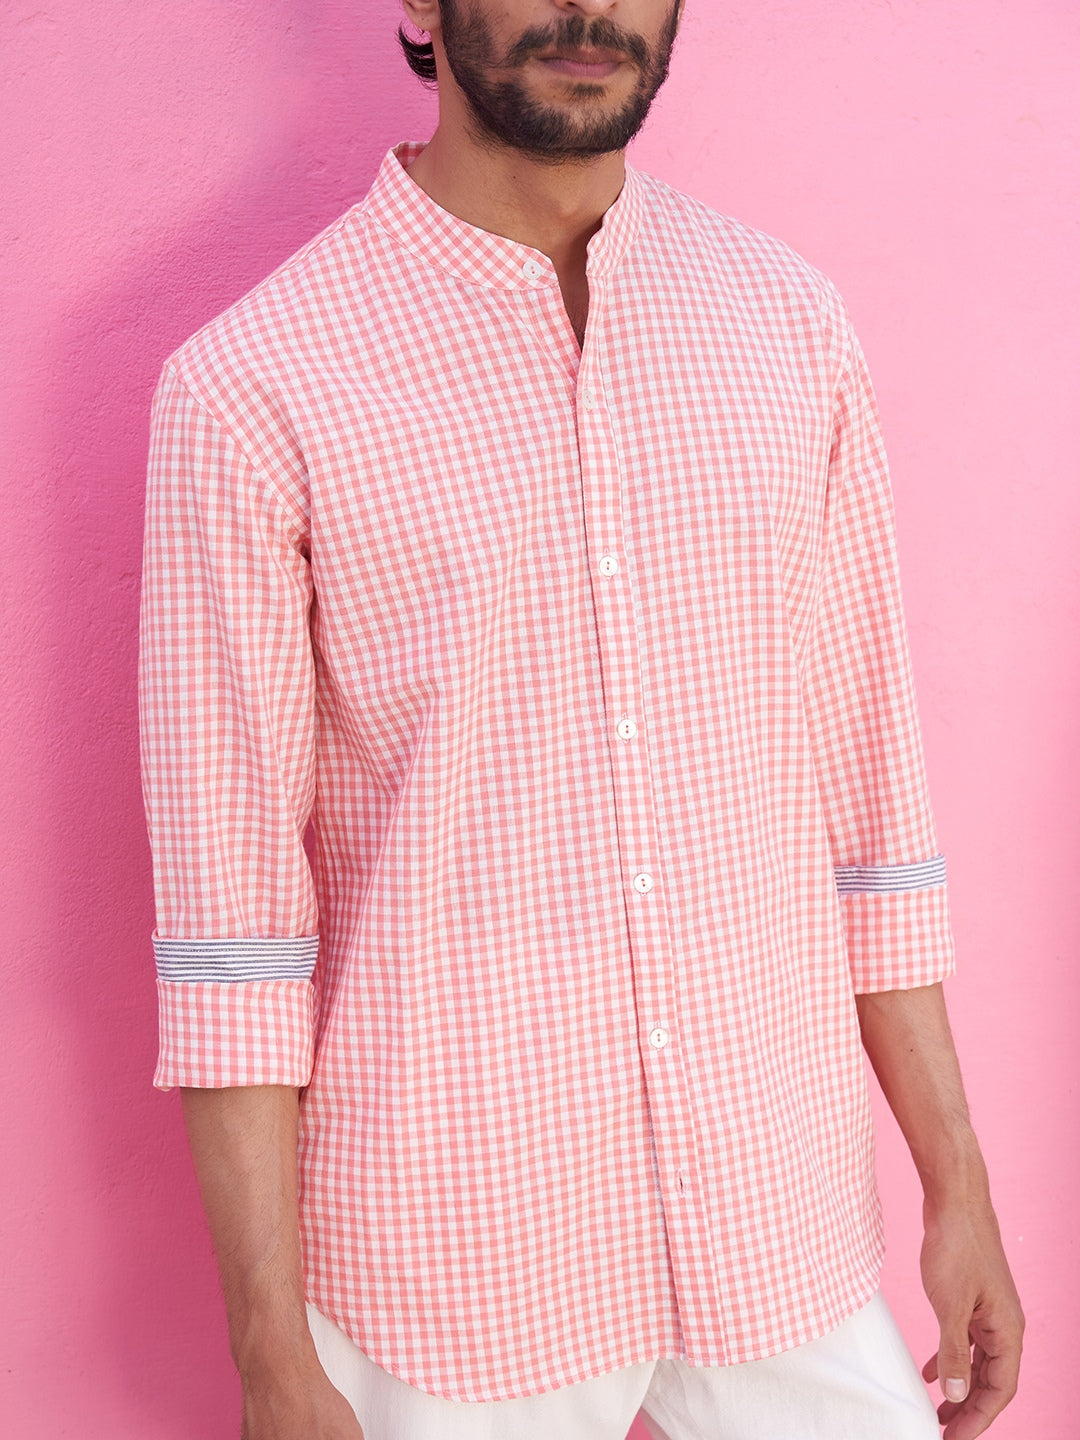 Mandarin collar pink gingham checks shirt